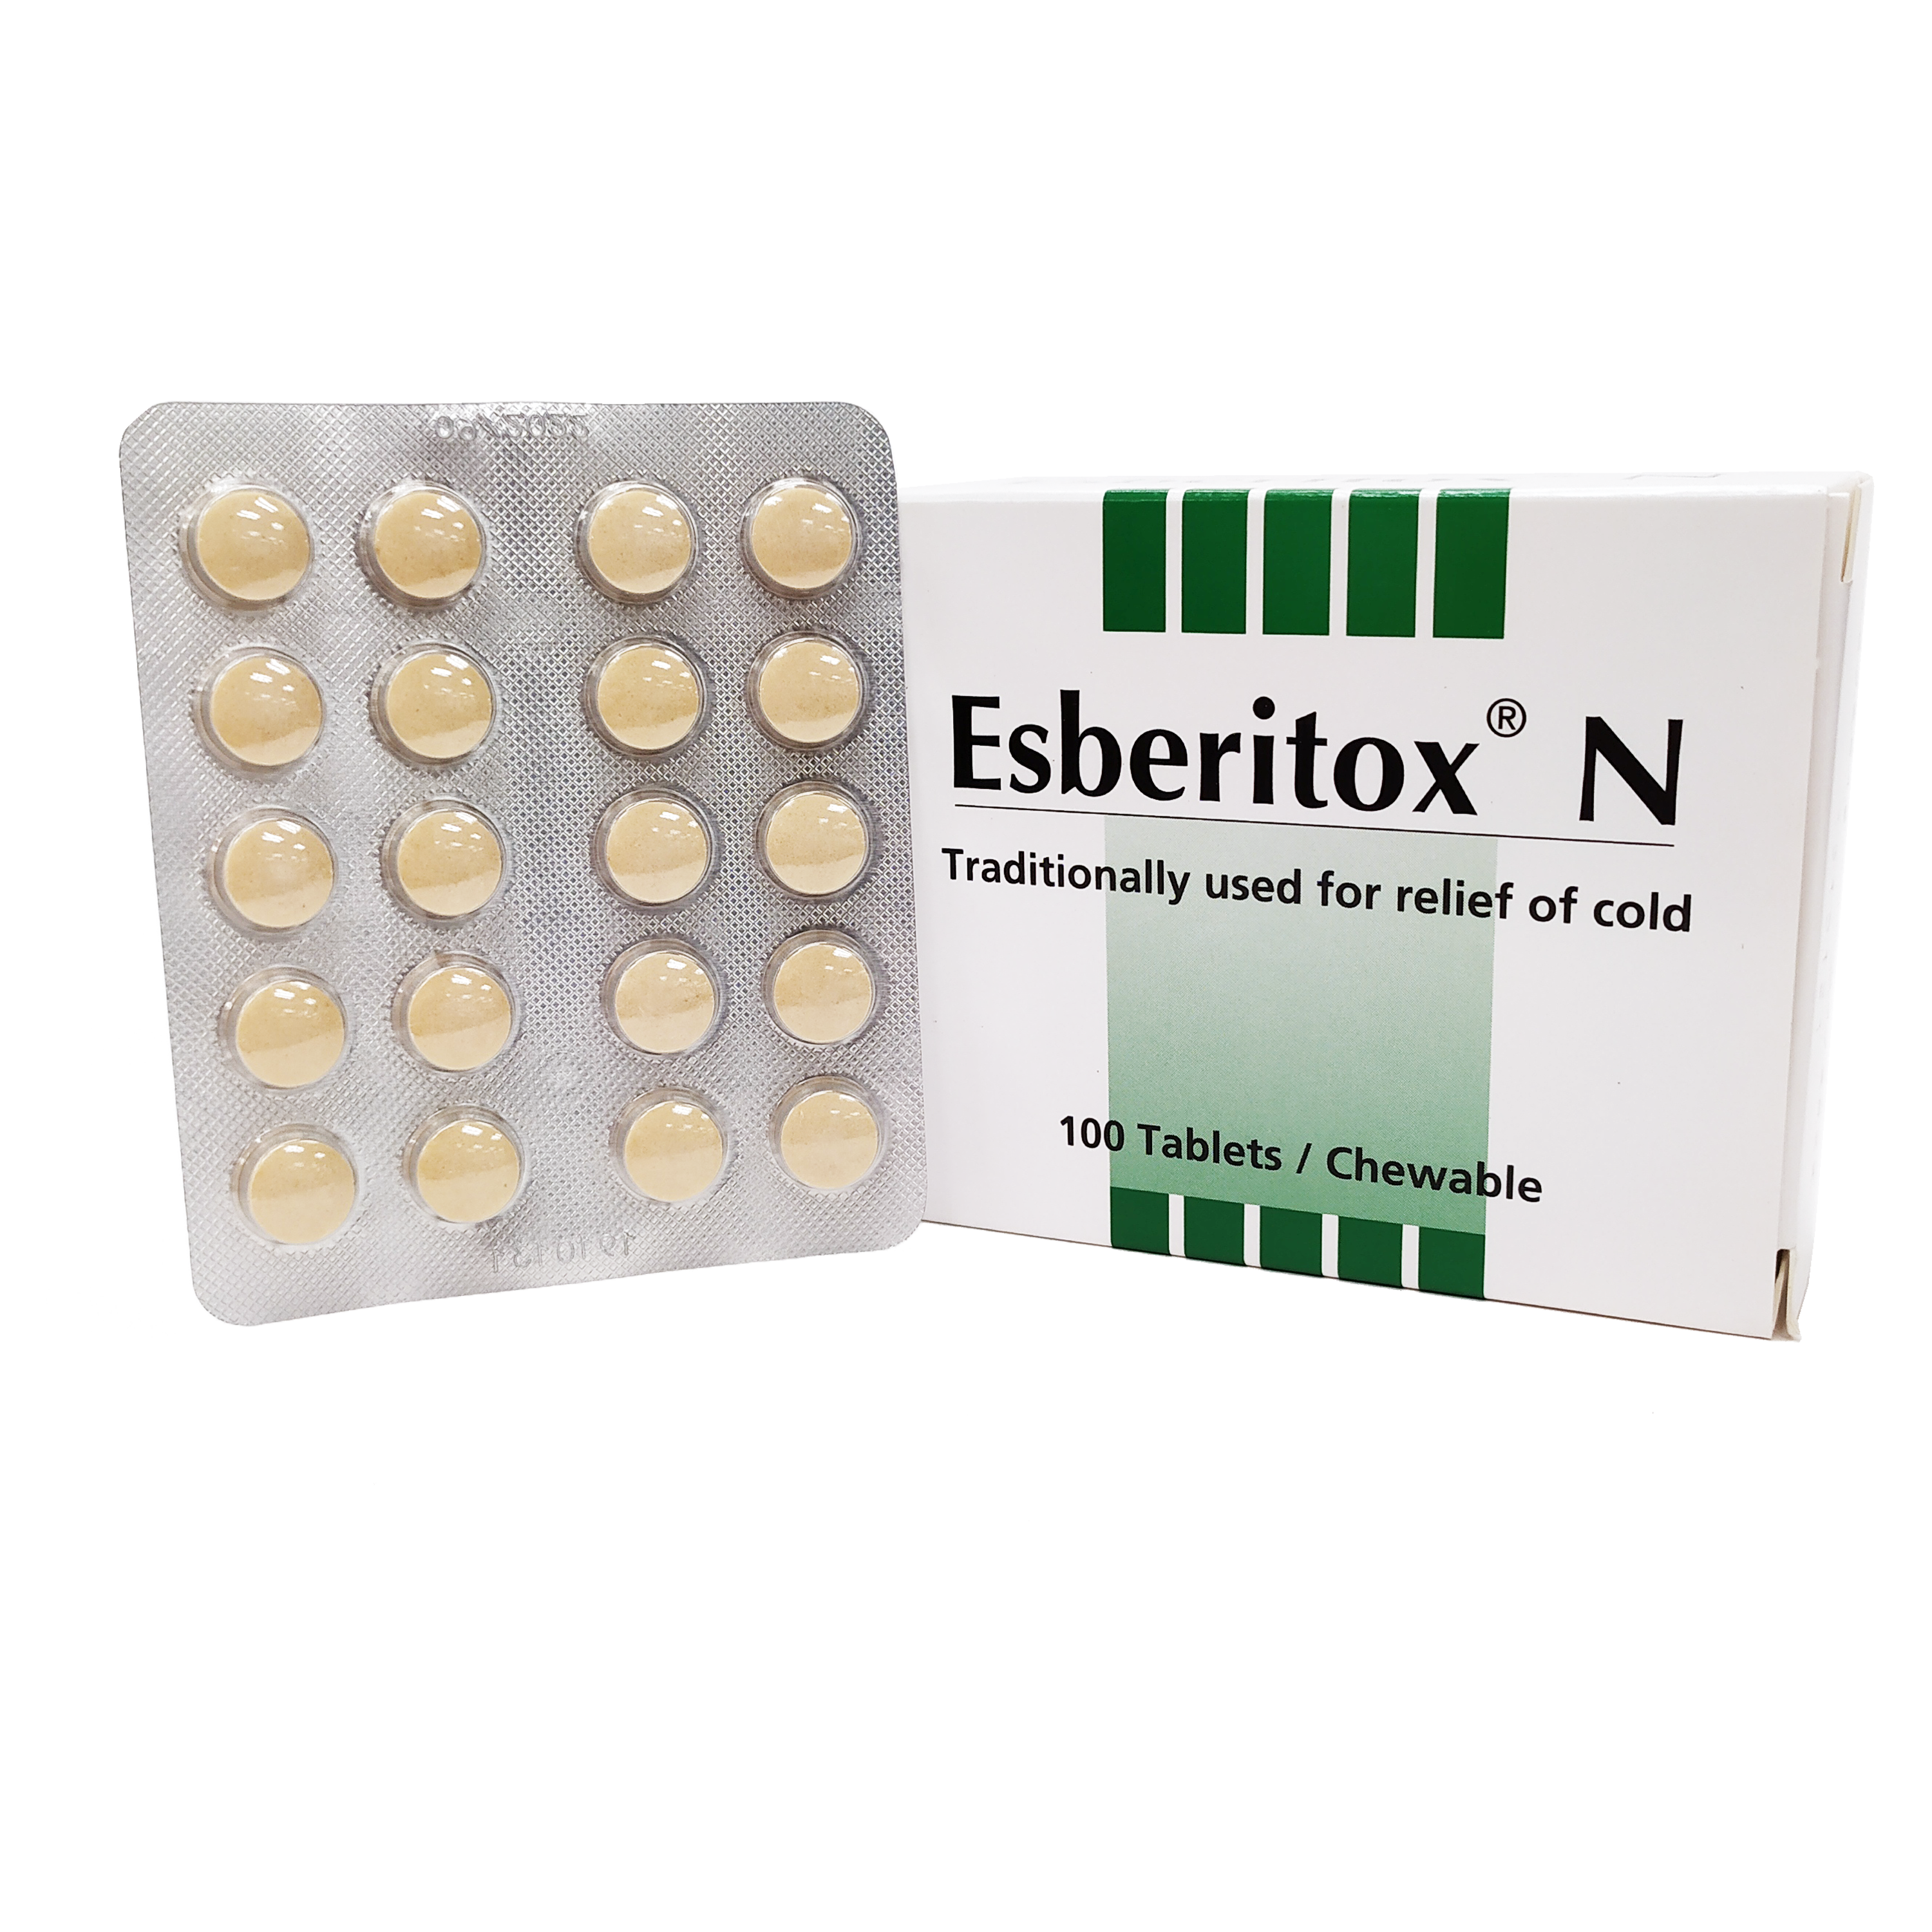 Esberitox Family Tablet 20s x5 - DoctorOnCall Online Pharmacy